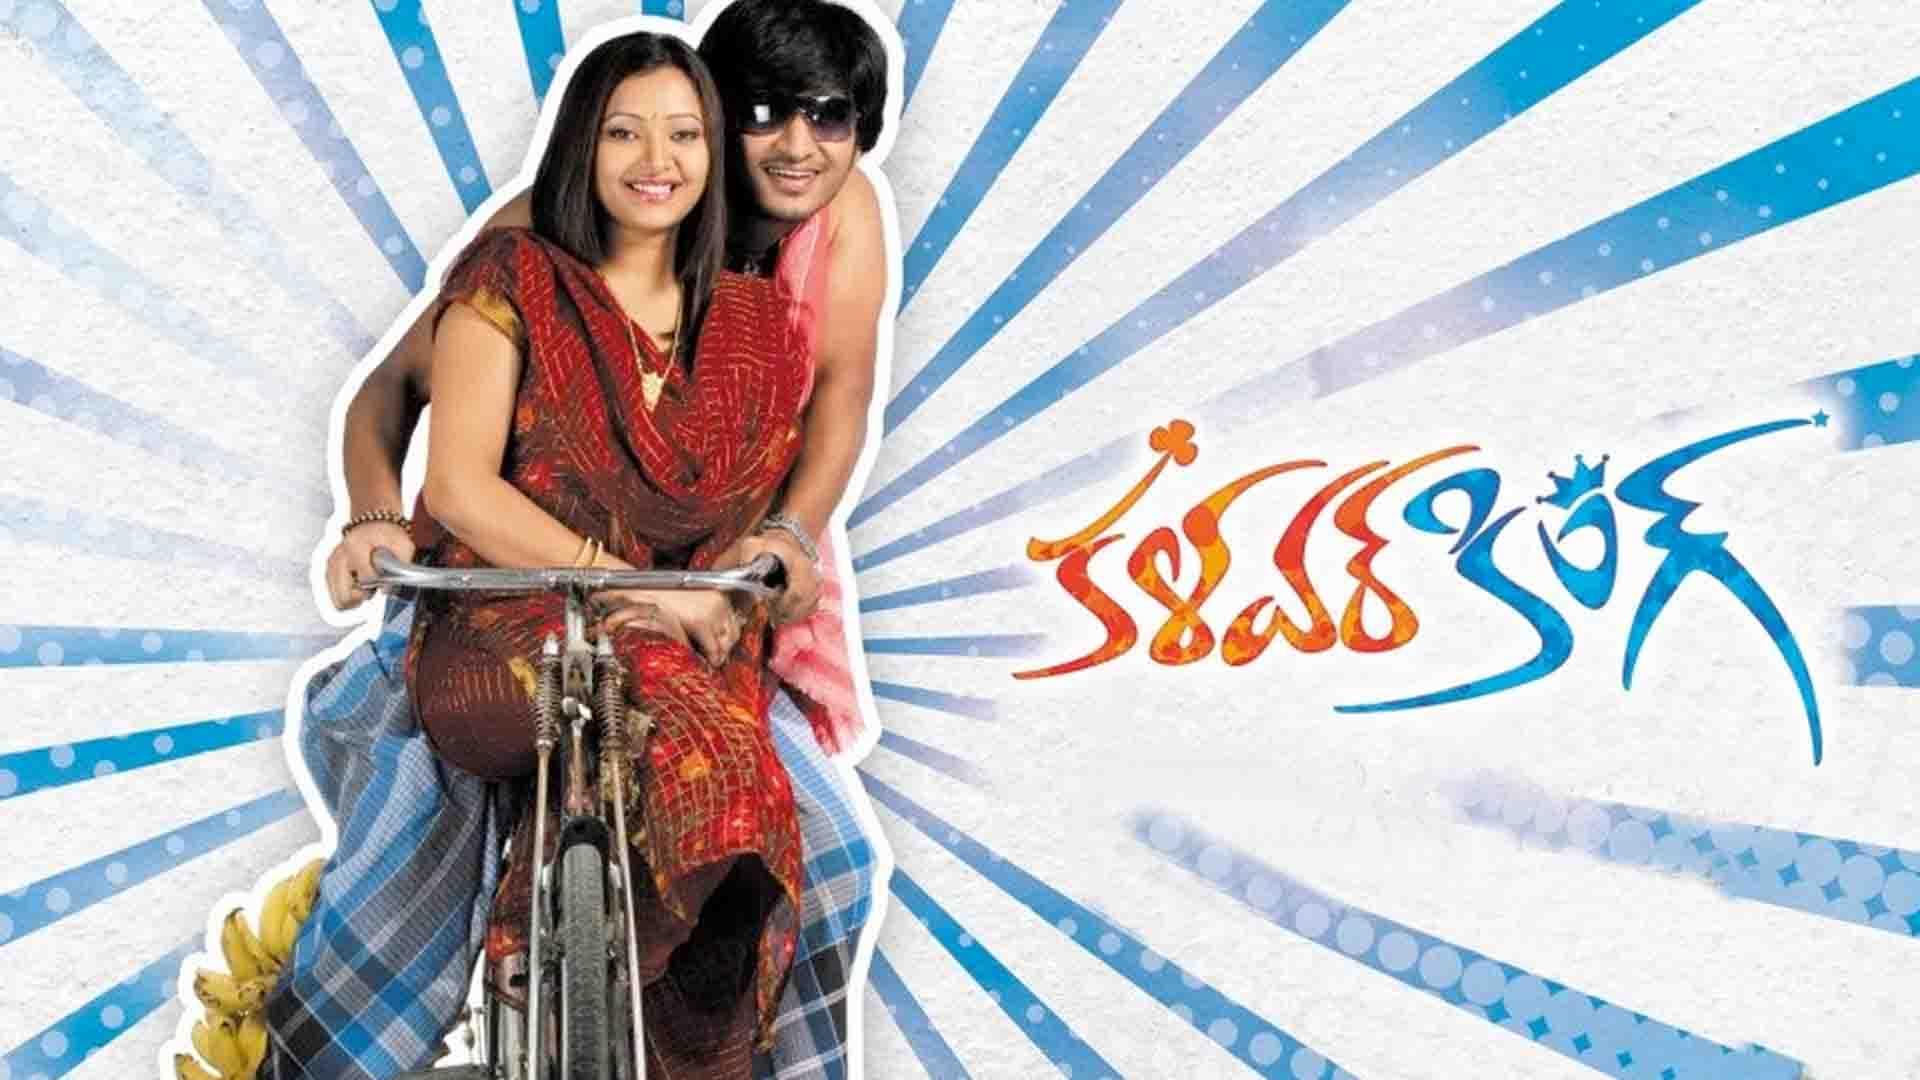 premam dubbed tamil movie free download